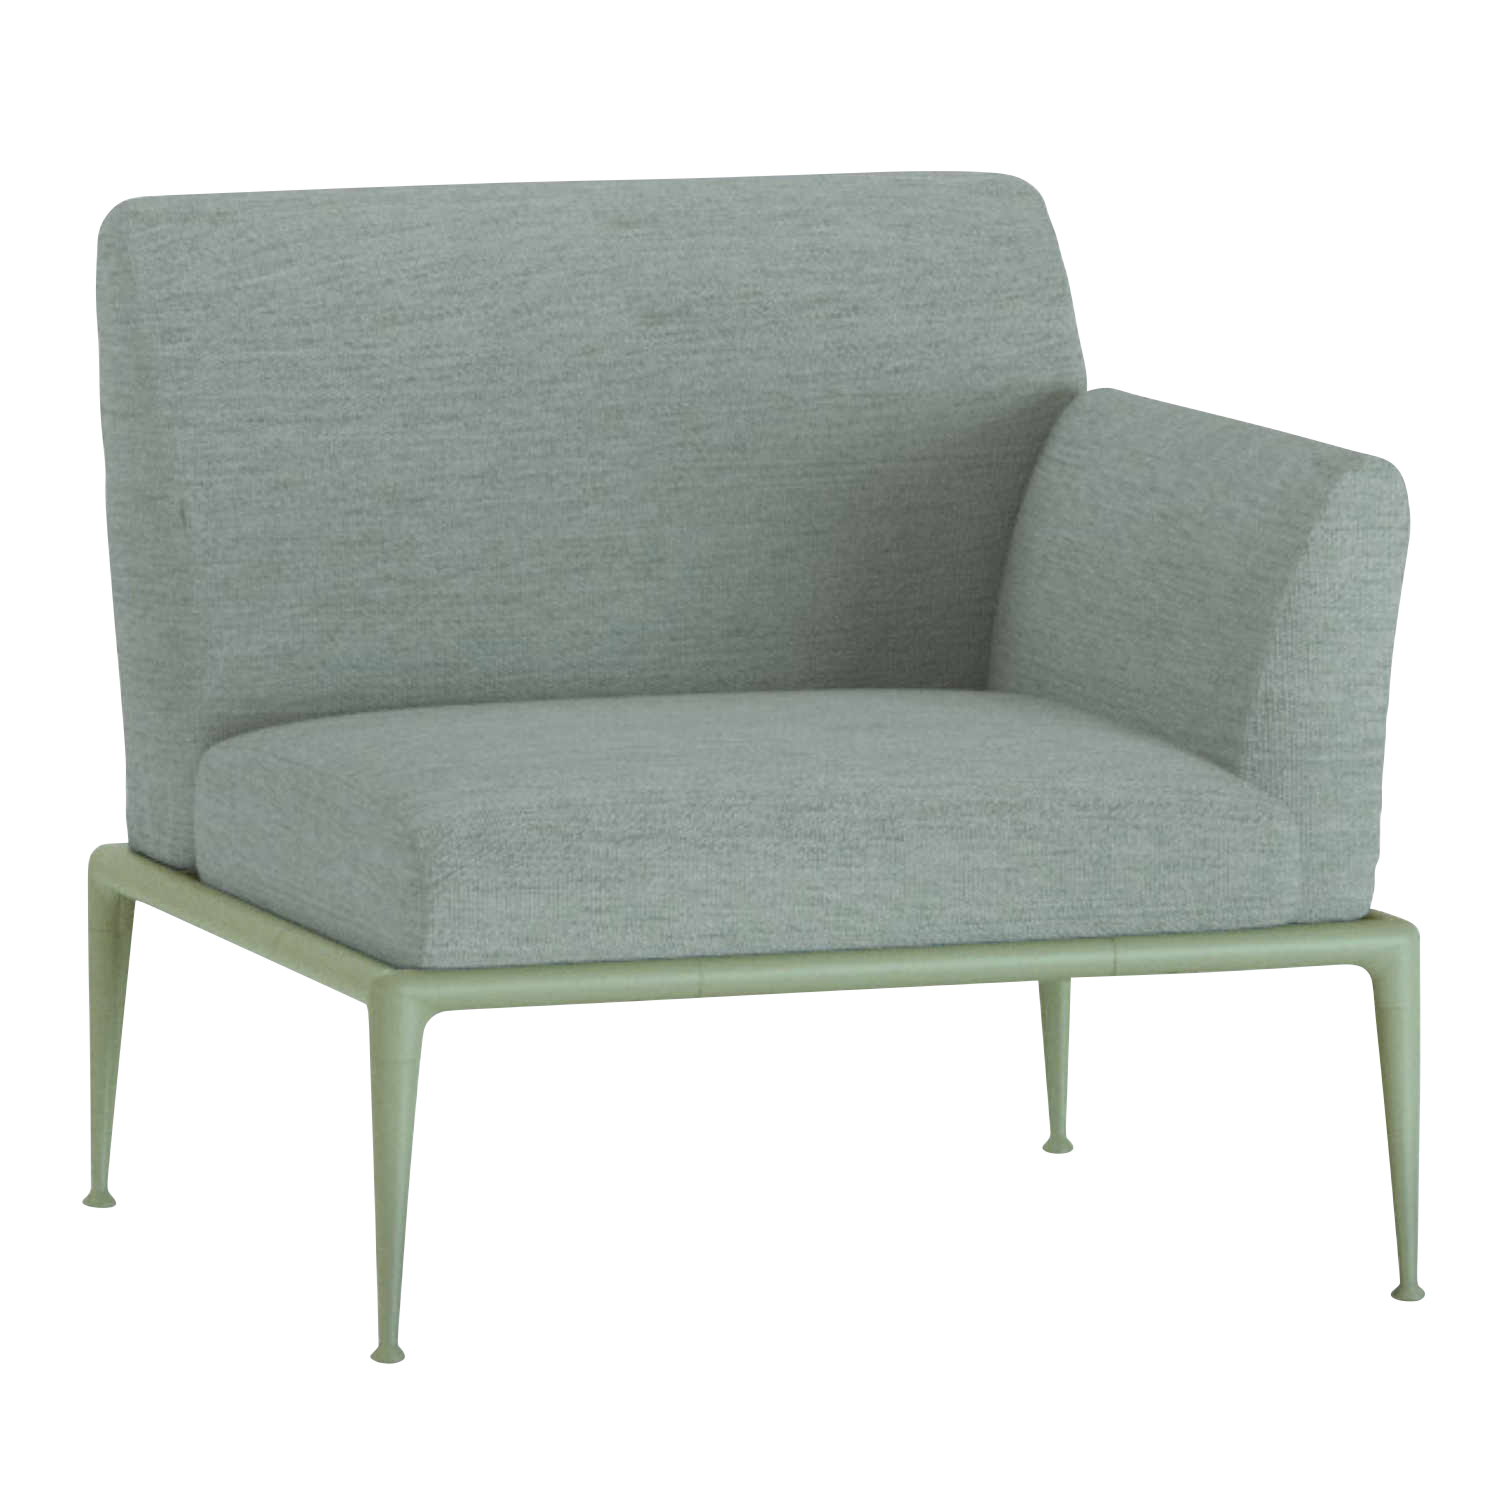 New Joint Sessel, Ausführung armlehne links/sitzend rechts, Stoff range 1 solids, pearl (beige), Gestell aluminium lackiert, dark green (dunkelgrün) von FAST